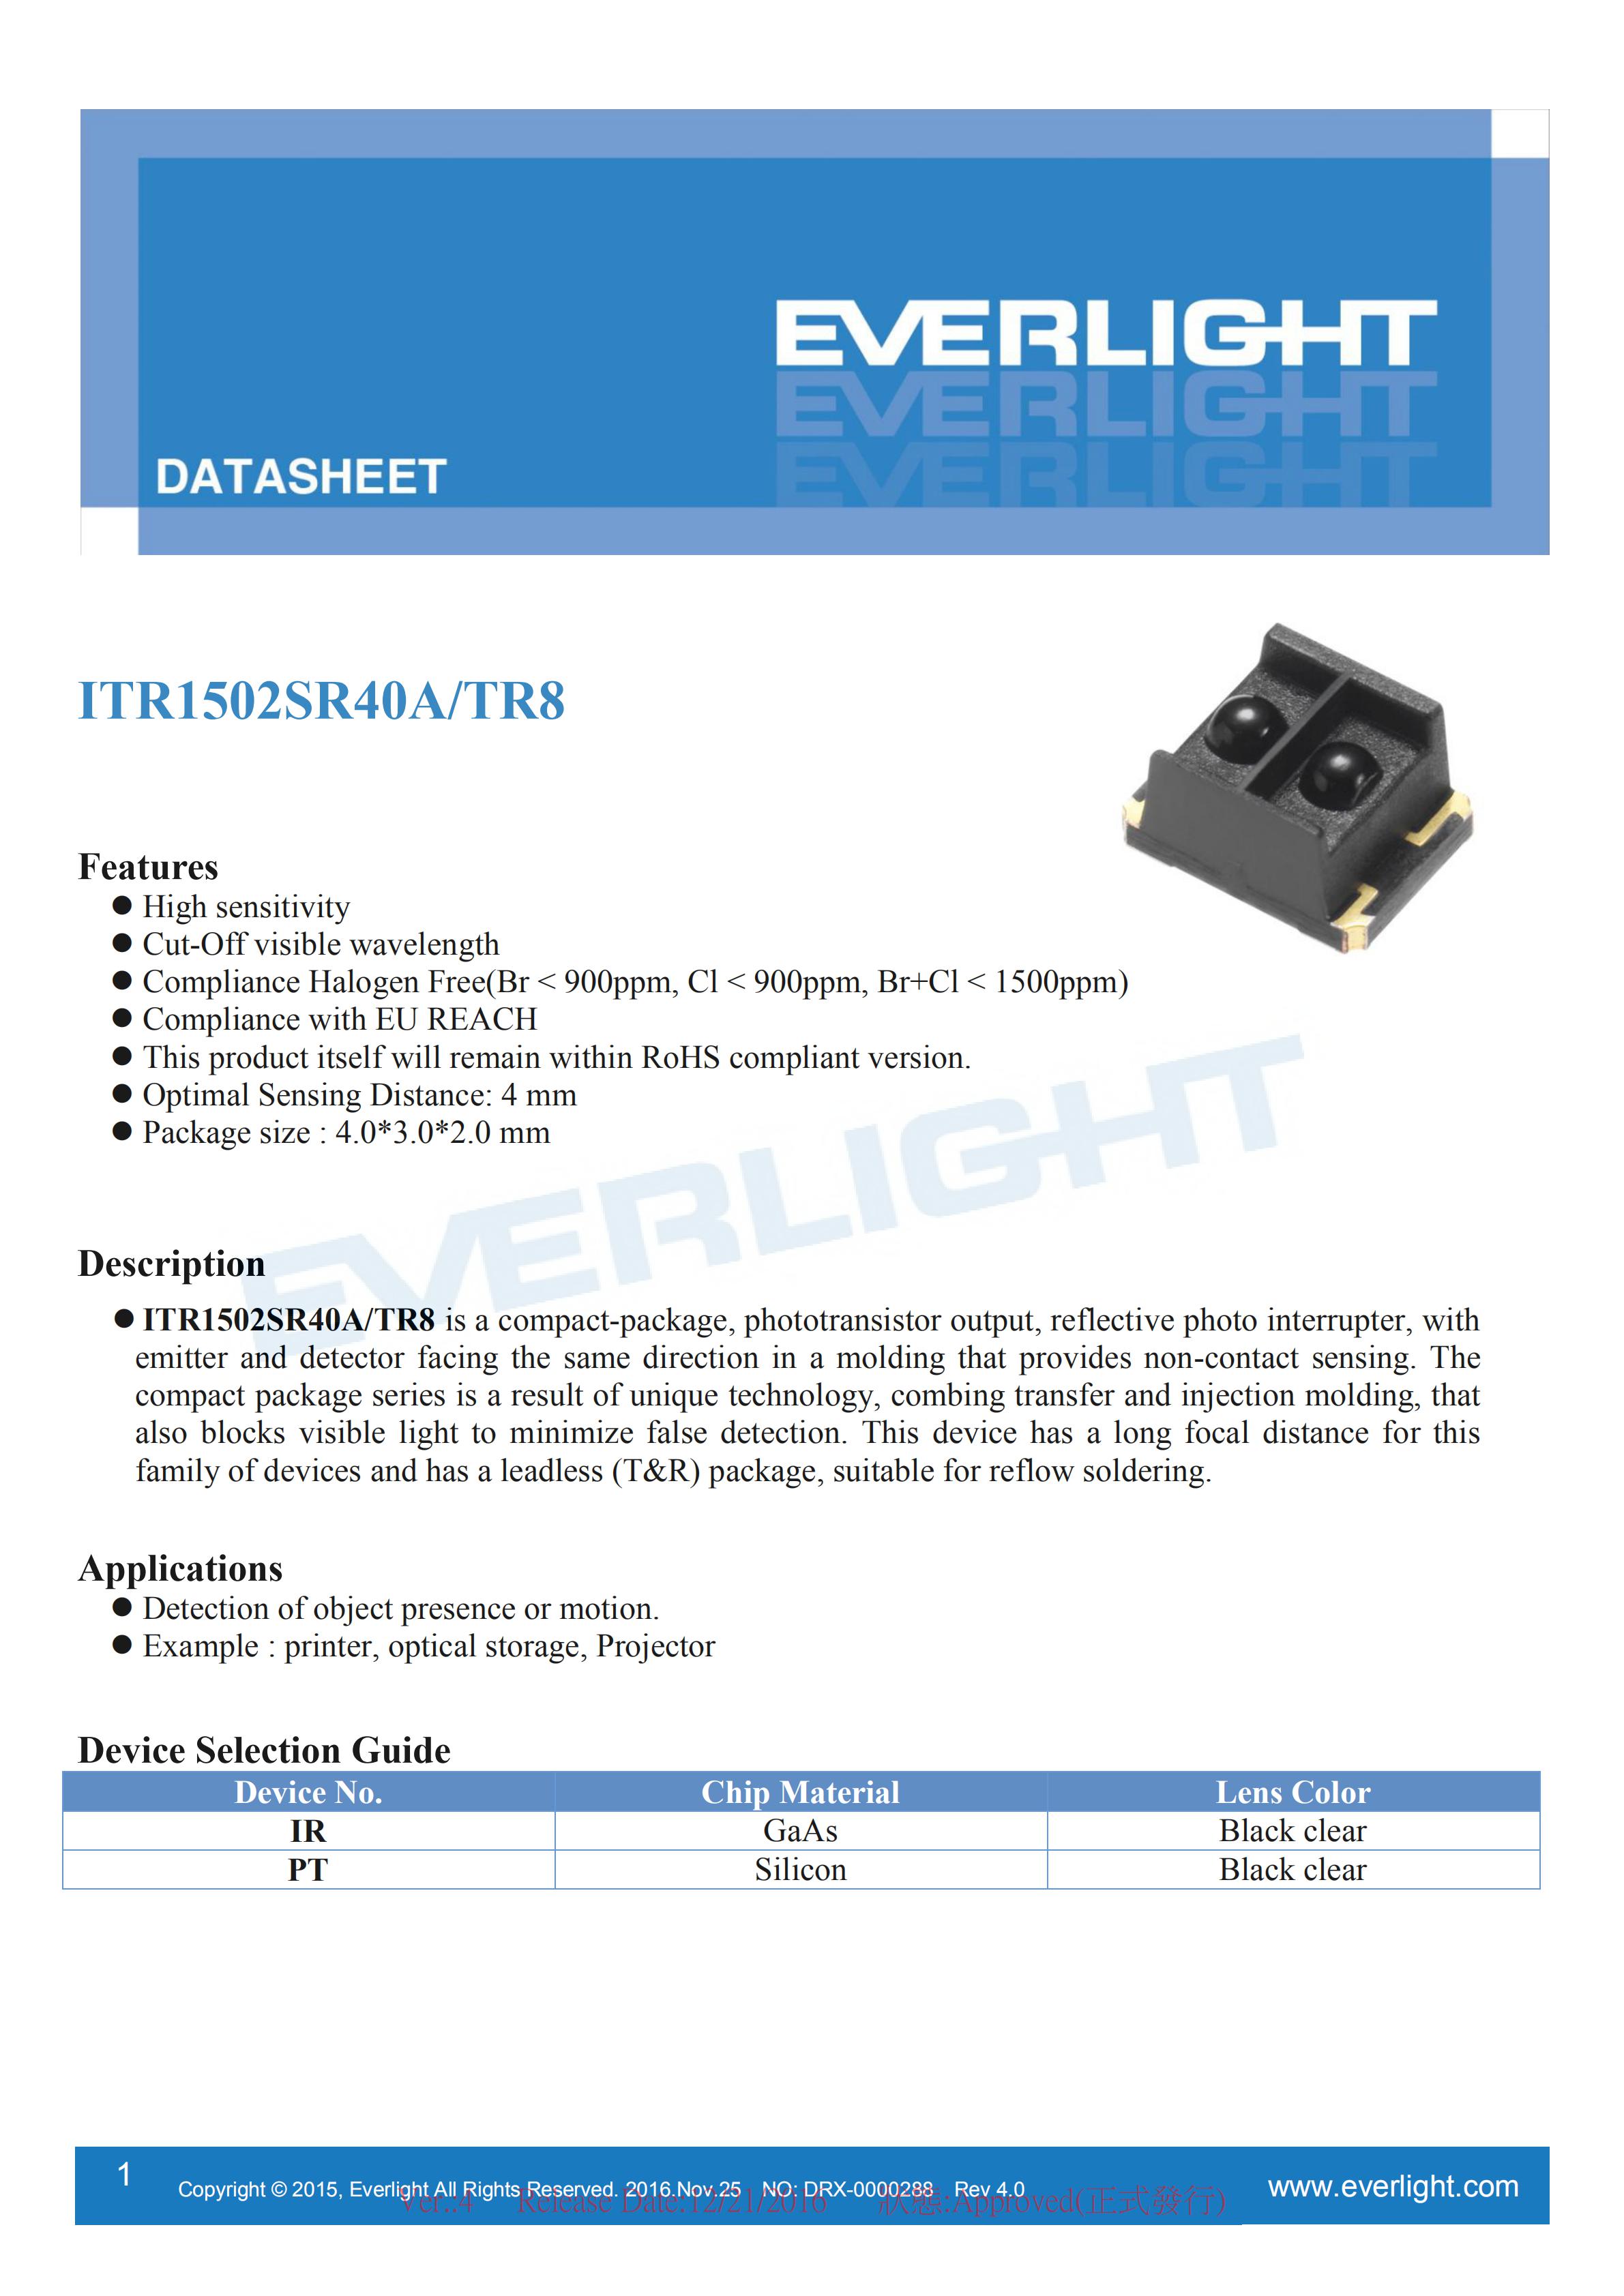 EVERLIGHT ITR1502SR40A/TR8 Datasheet